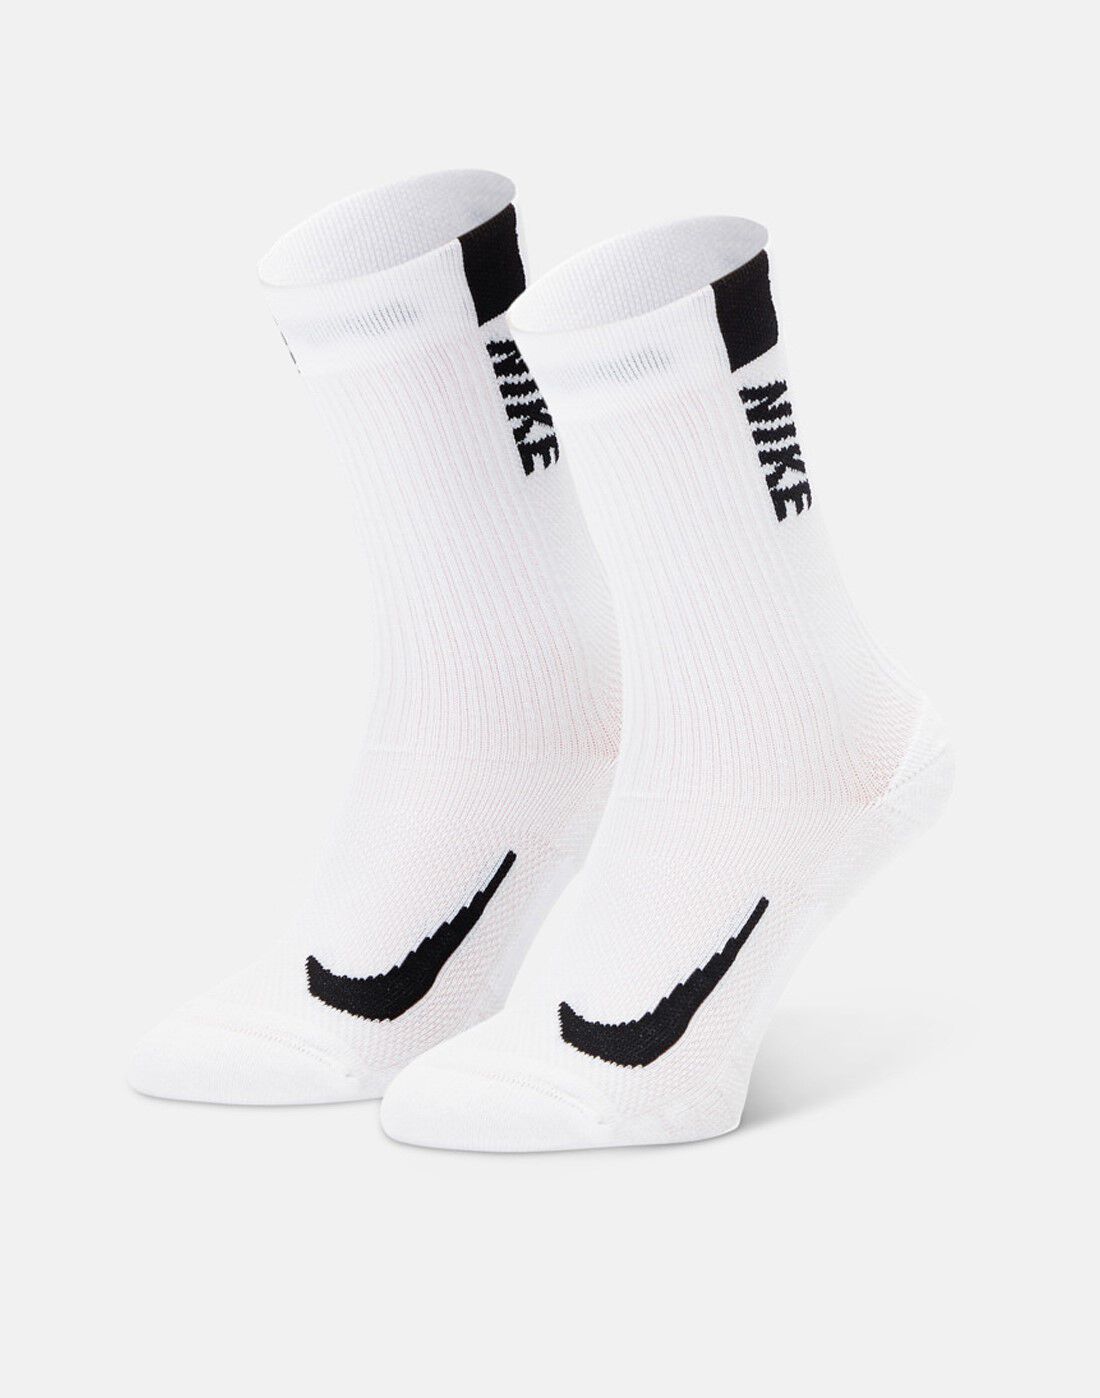 nike socks black friday sale